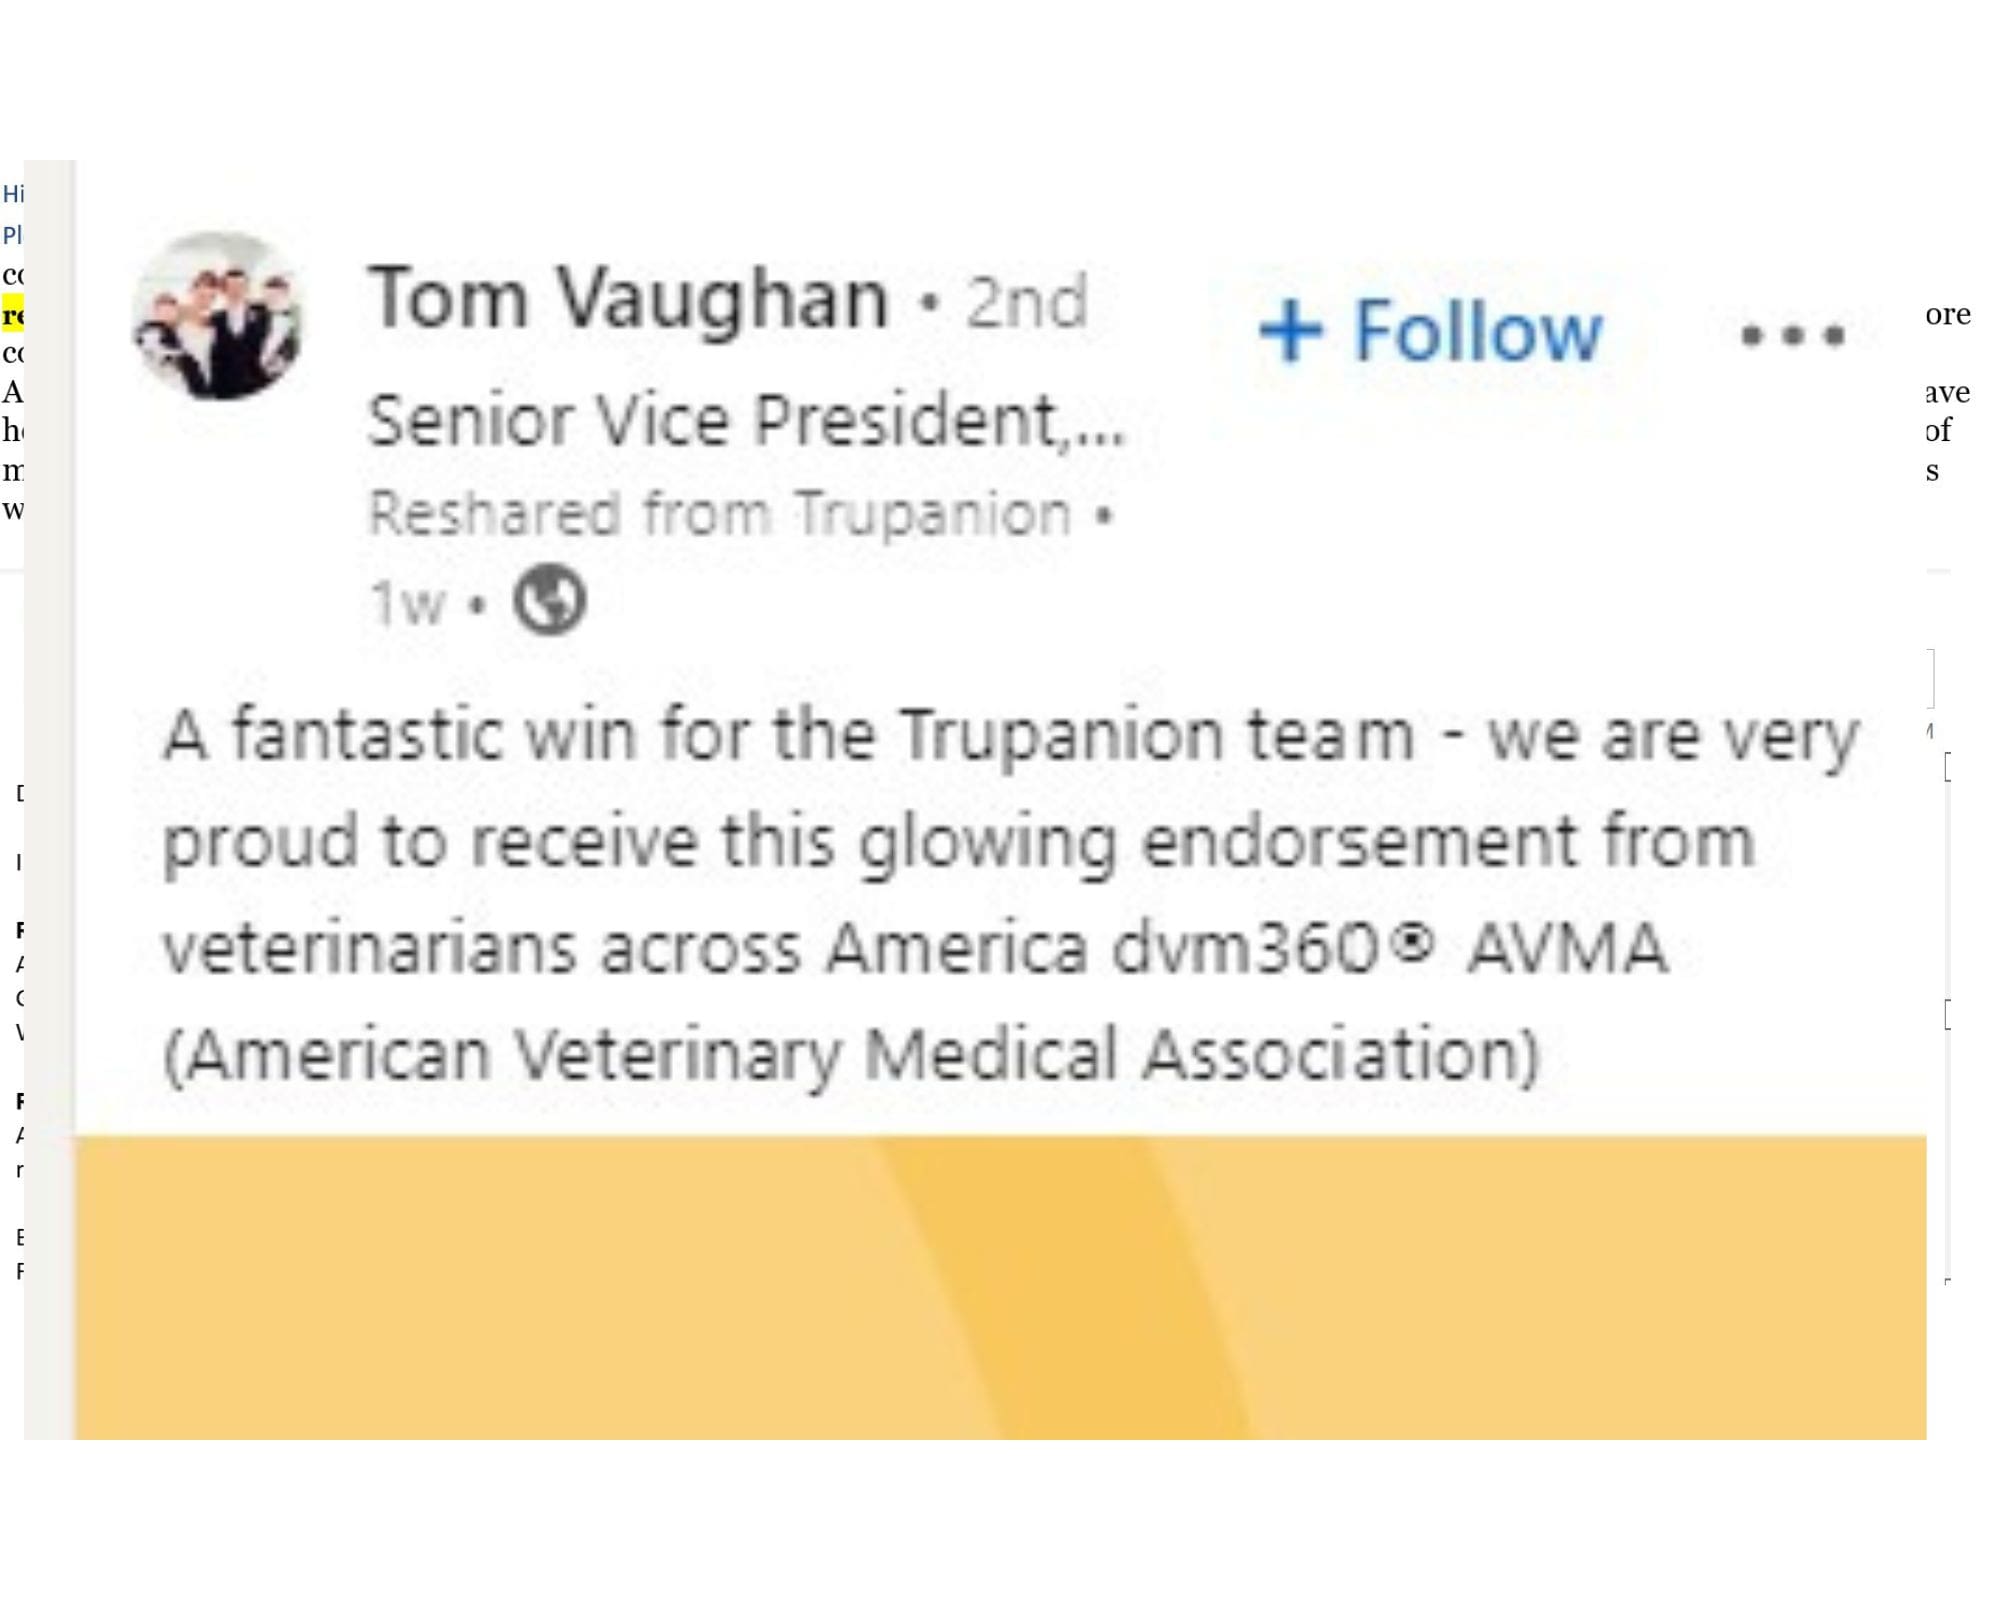 Trupanion's new marketing hire celebrates a DVM360 endorsement.